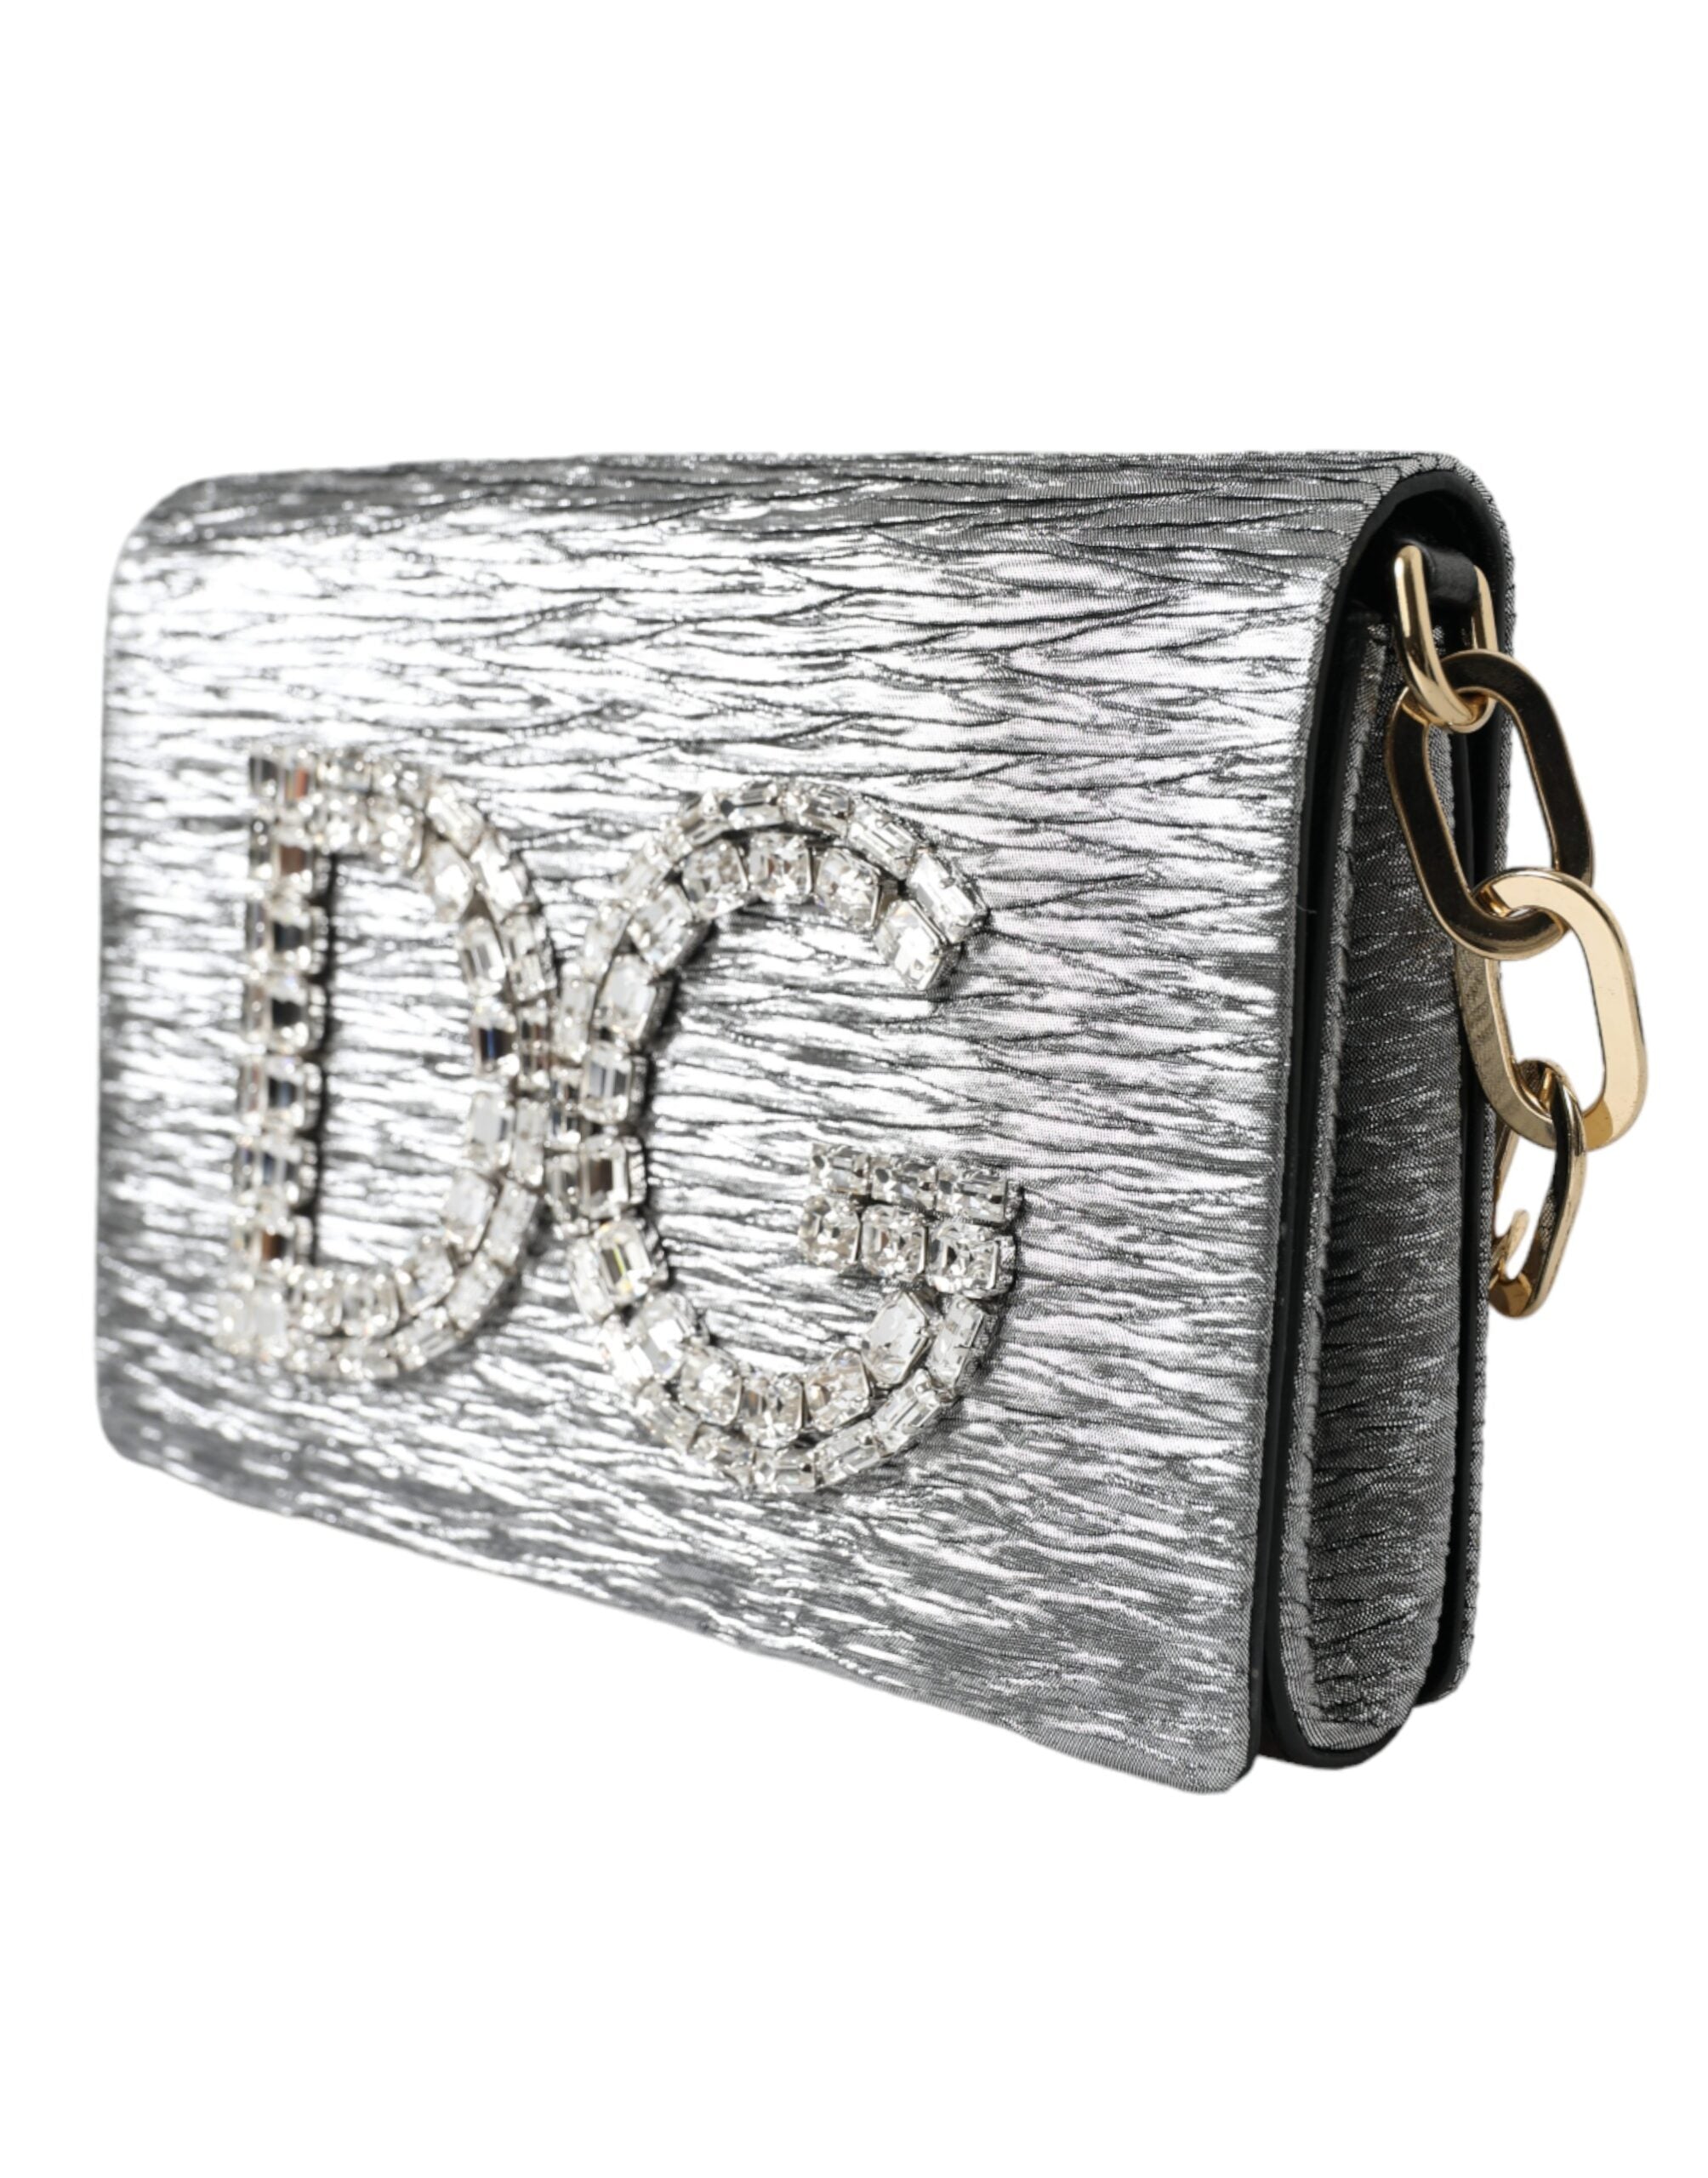 Dolce & Gabbana Exquisite Silver Swarovski Embellished Clutch